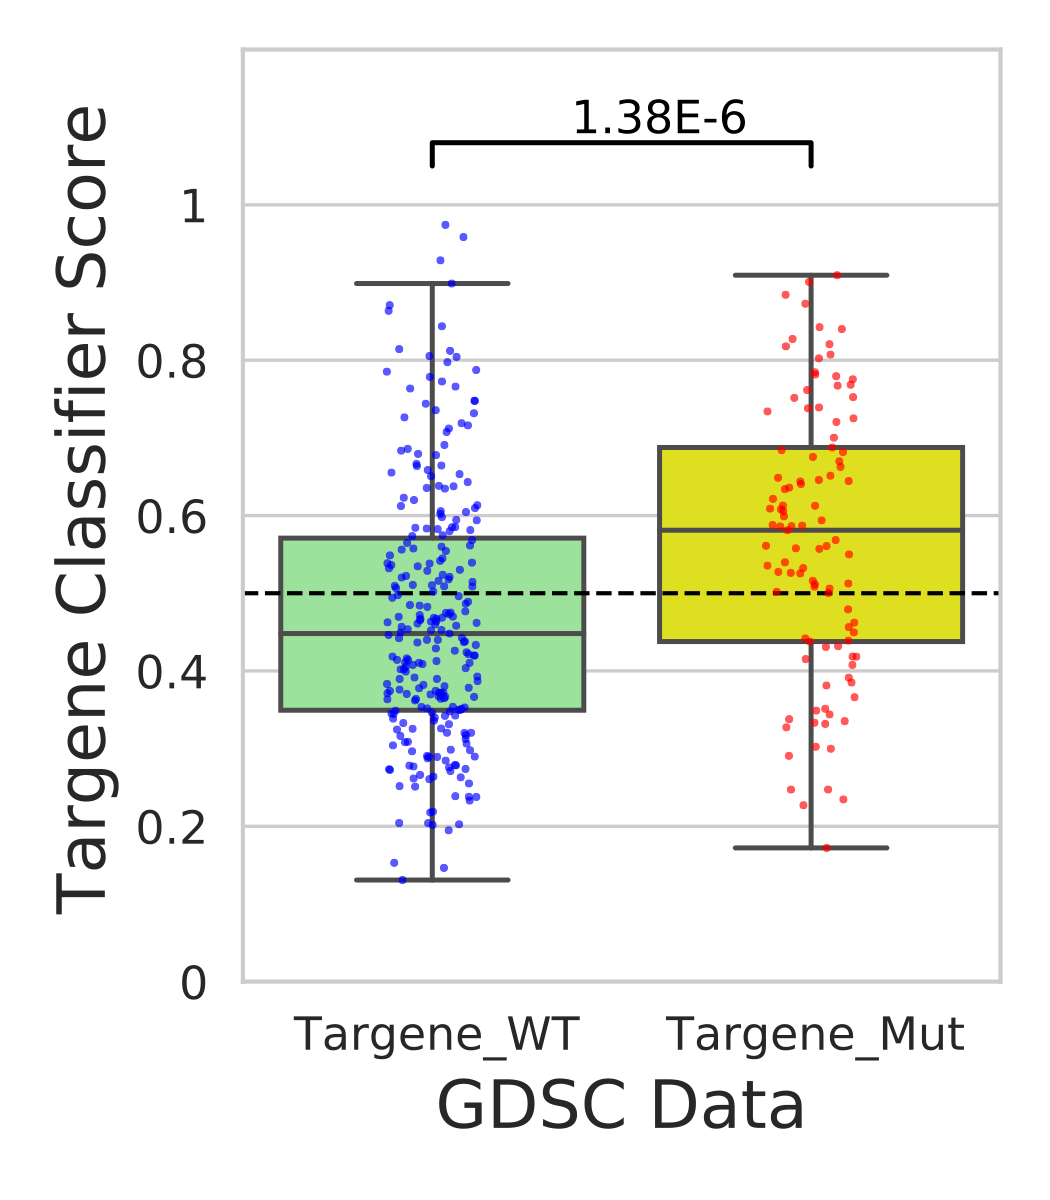 GDSC_targene_celline_classification. 